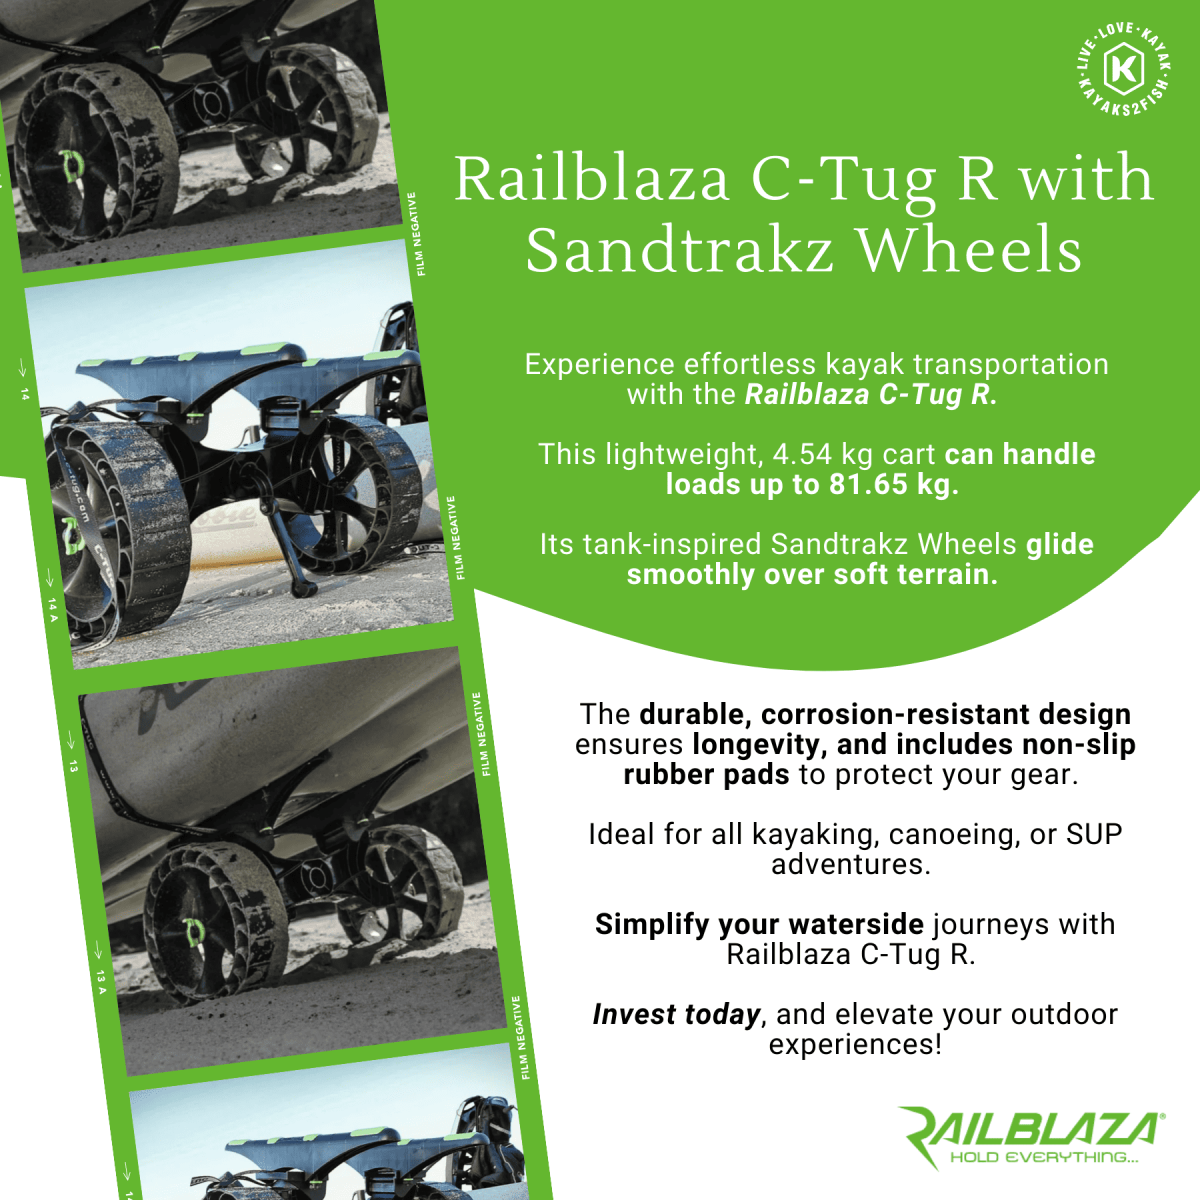 Railblaza C-Tug R with Sandtrakz Wheels